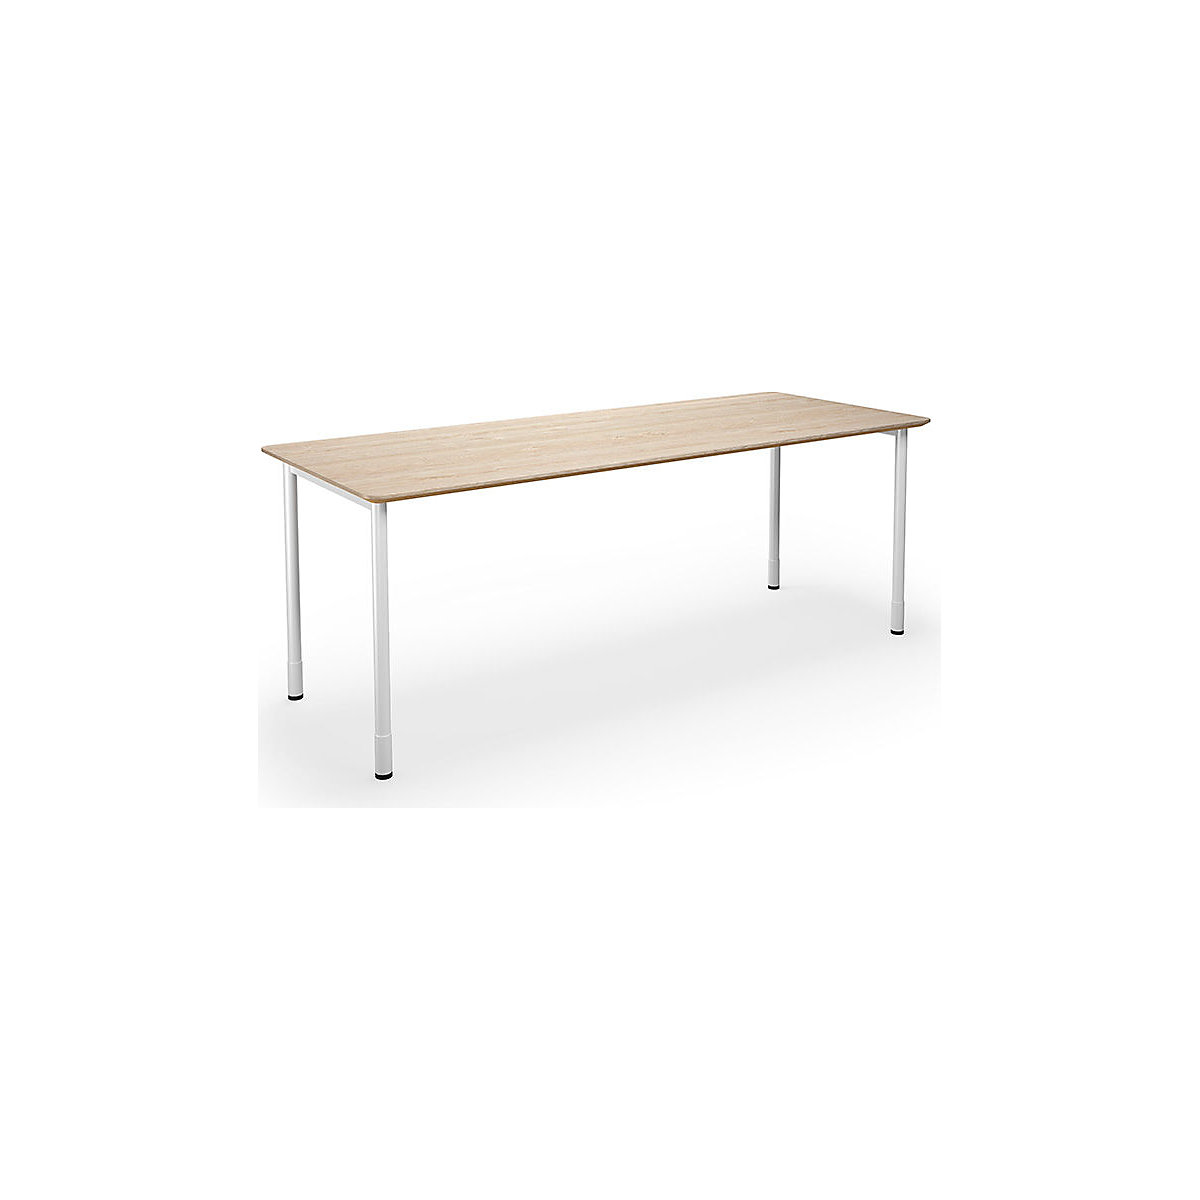 DUO-C Trend multi-purpose desk, straight tabletop, rounded corners, WxD 2000 x 800 mm, oak, white-5